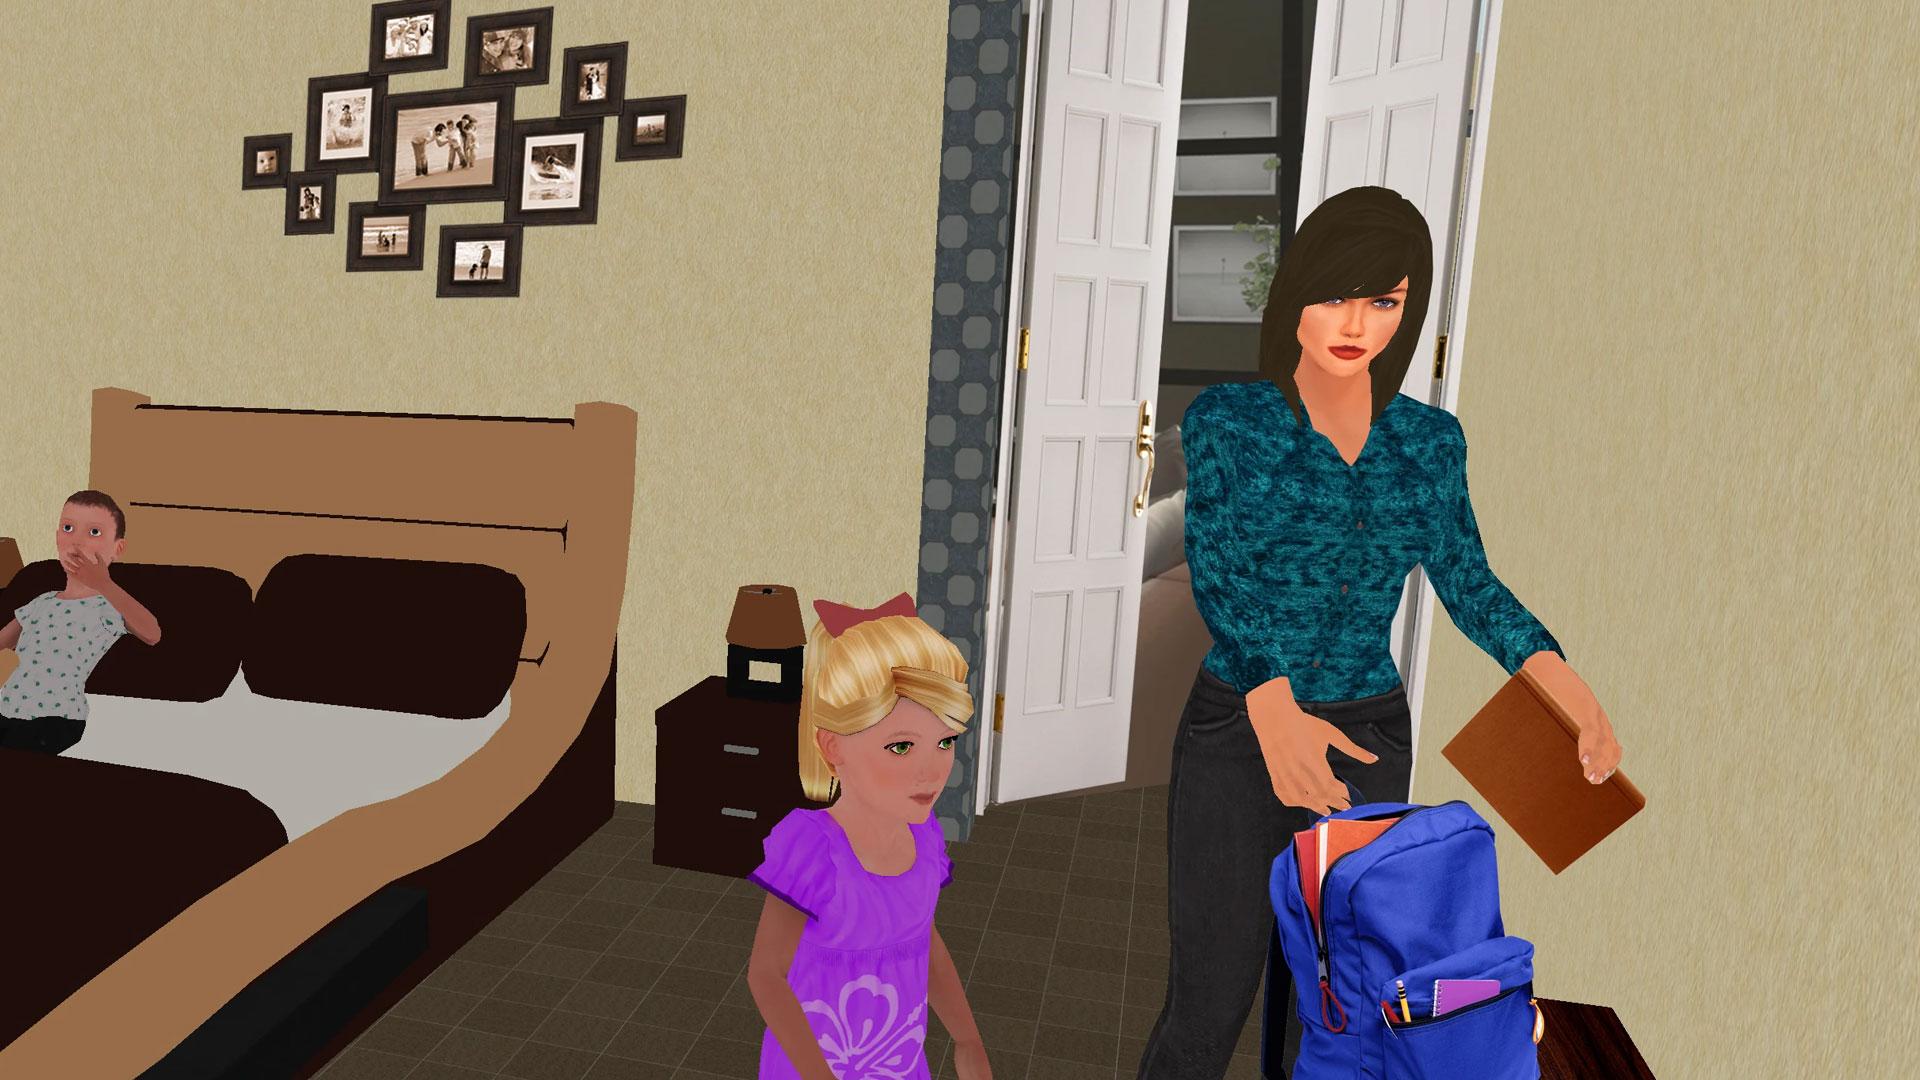 Virtual Single Mom Simulator